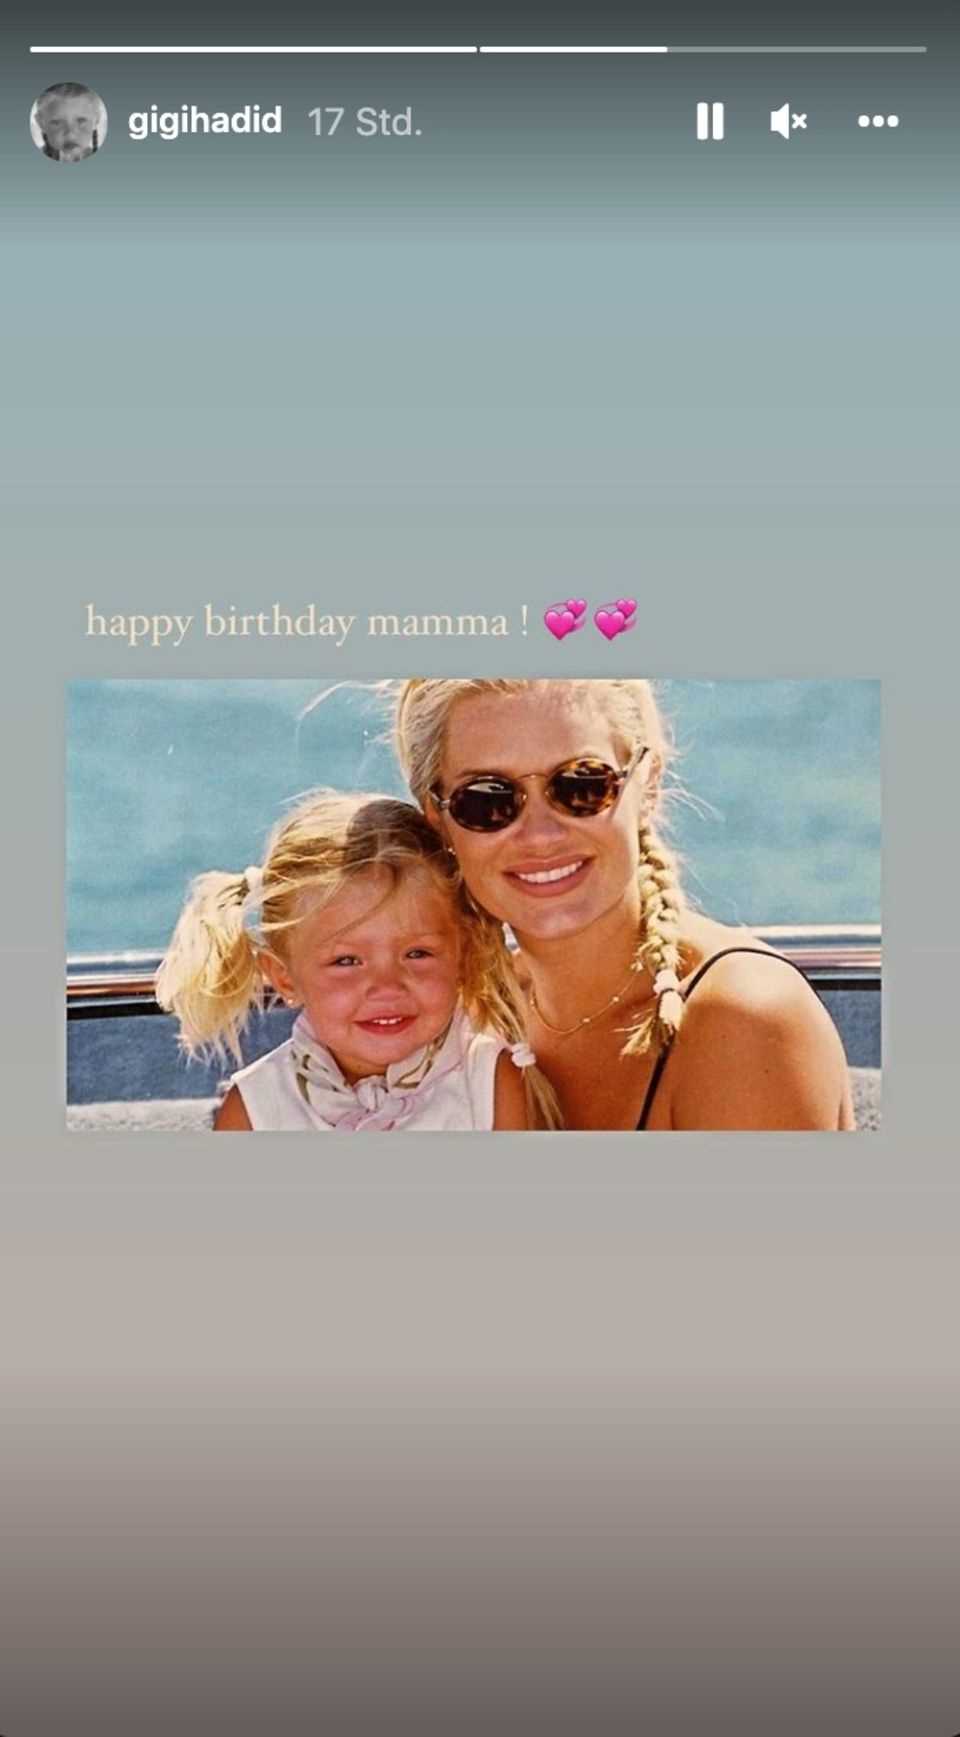 Gigi Hadid wishes her mother Yolanda a happy birthday